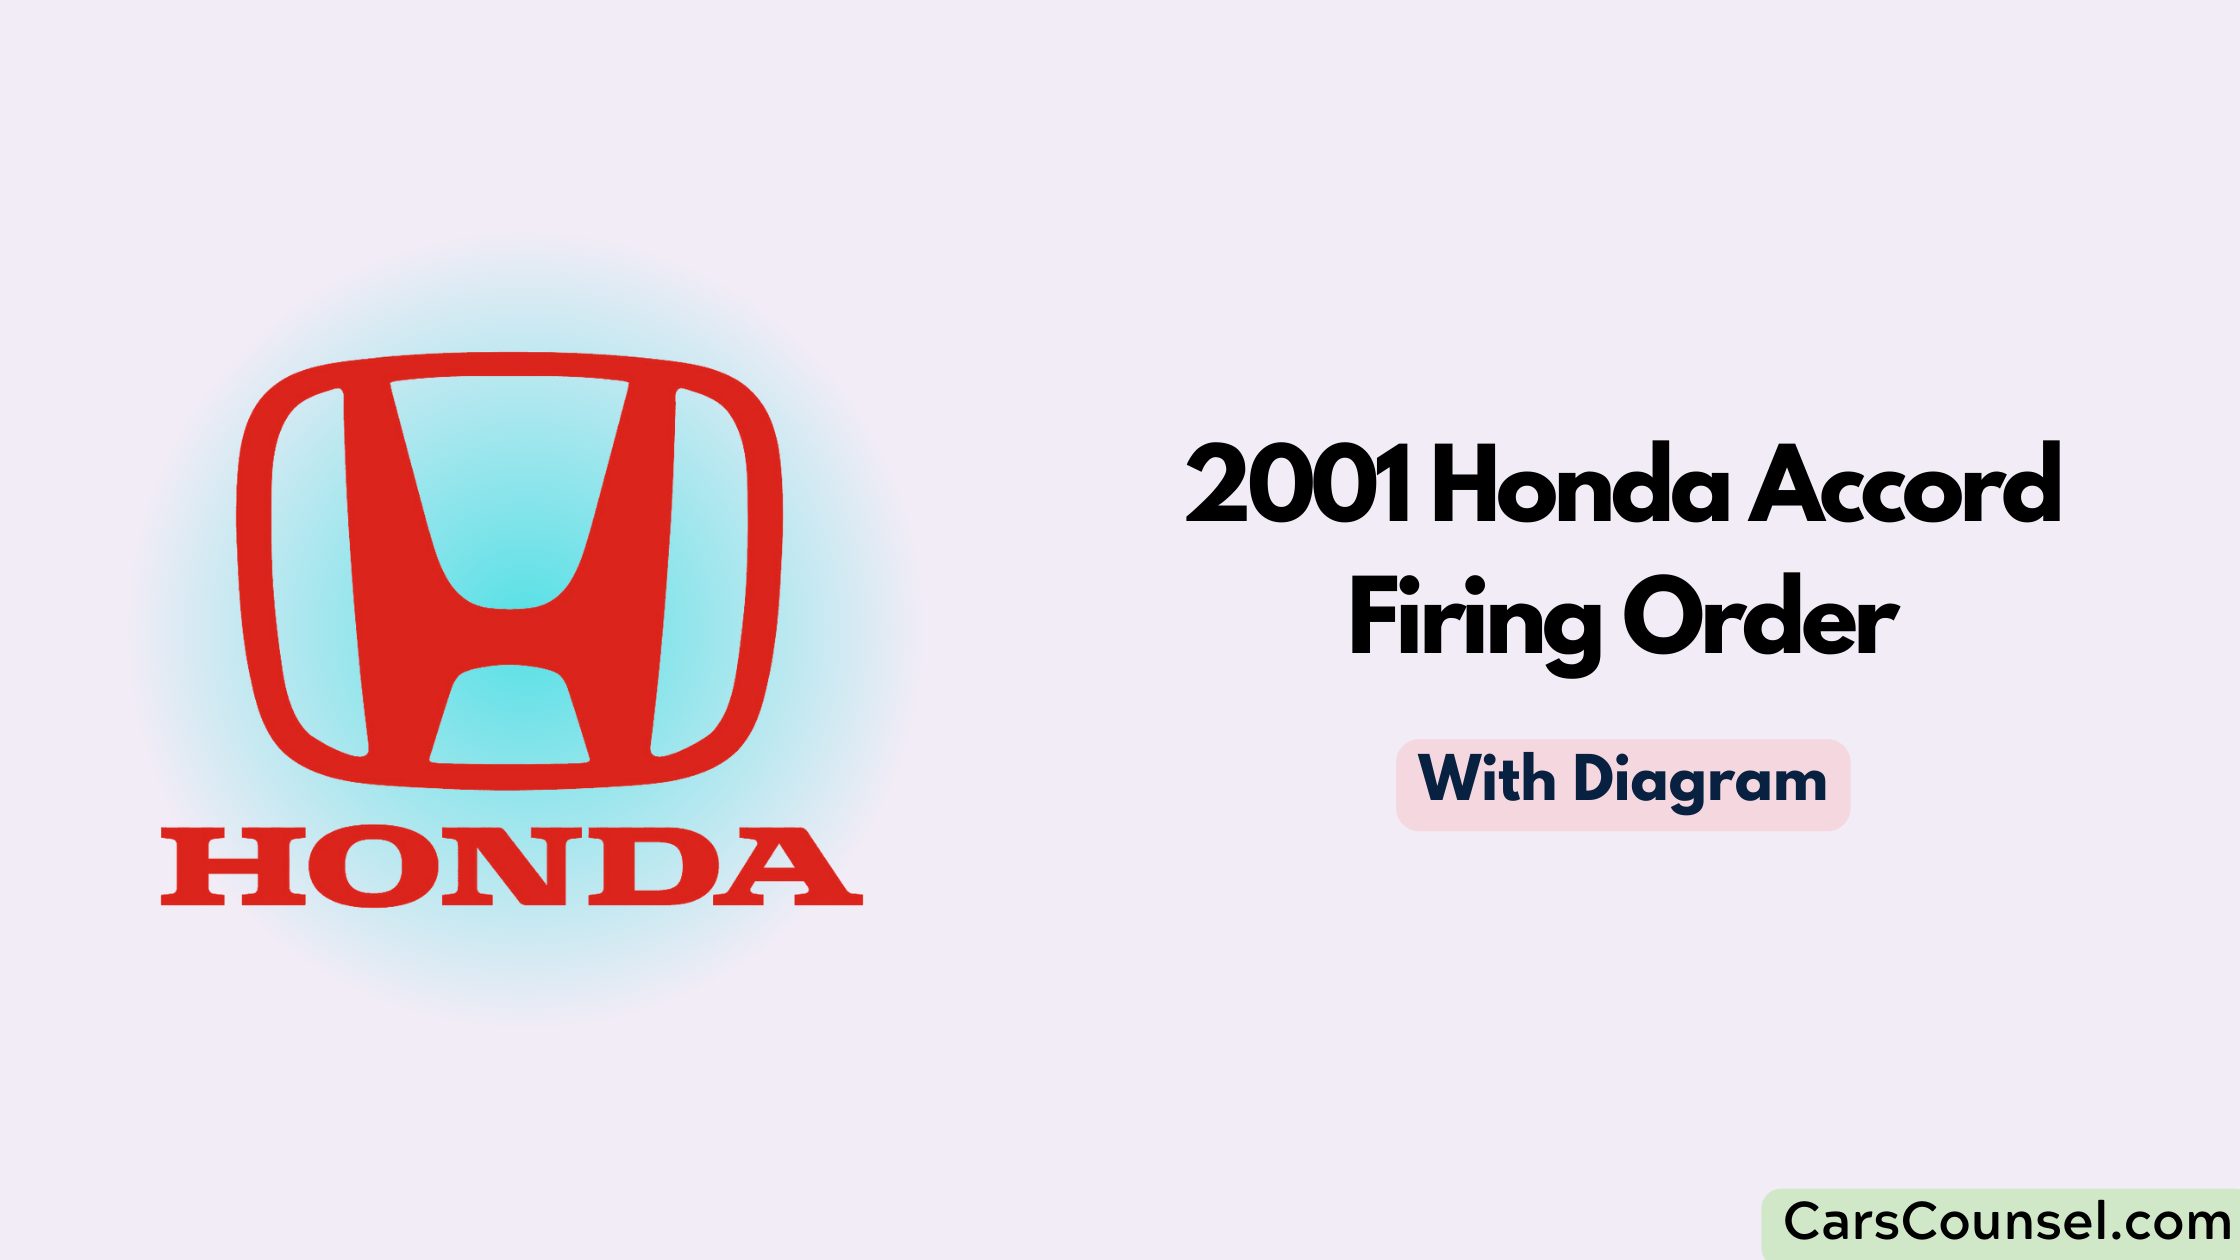 2001 Honda Accord Firing Order With Diagram